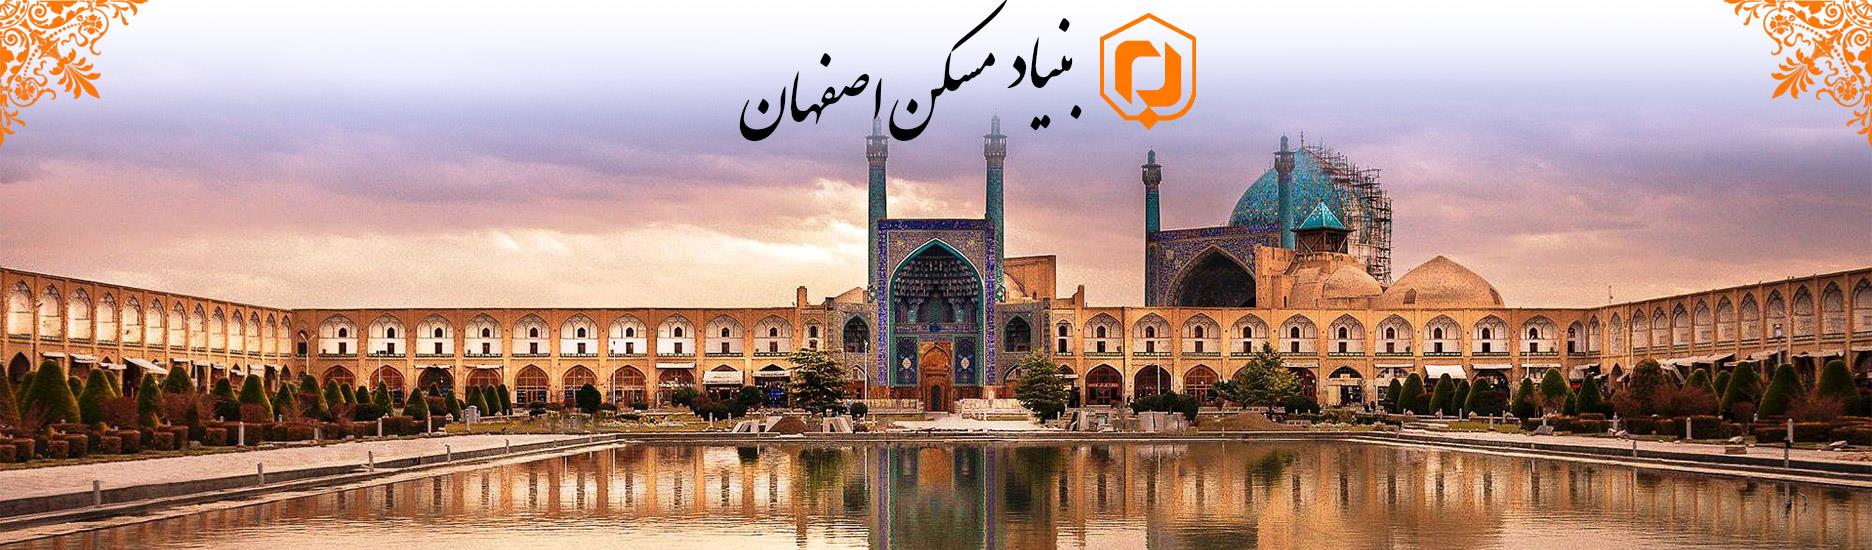 بنیاد مسکن انقلاب اسلامی استان اصفهان